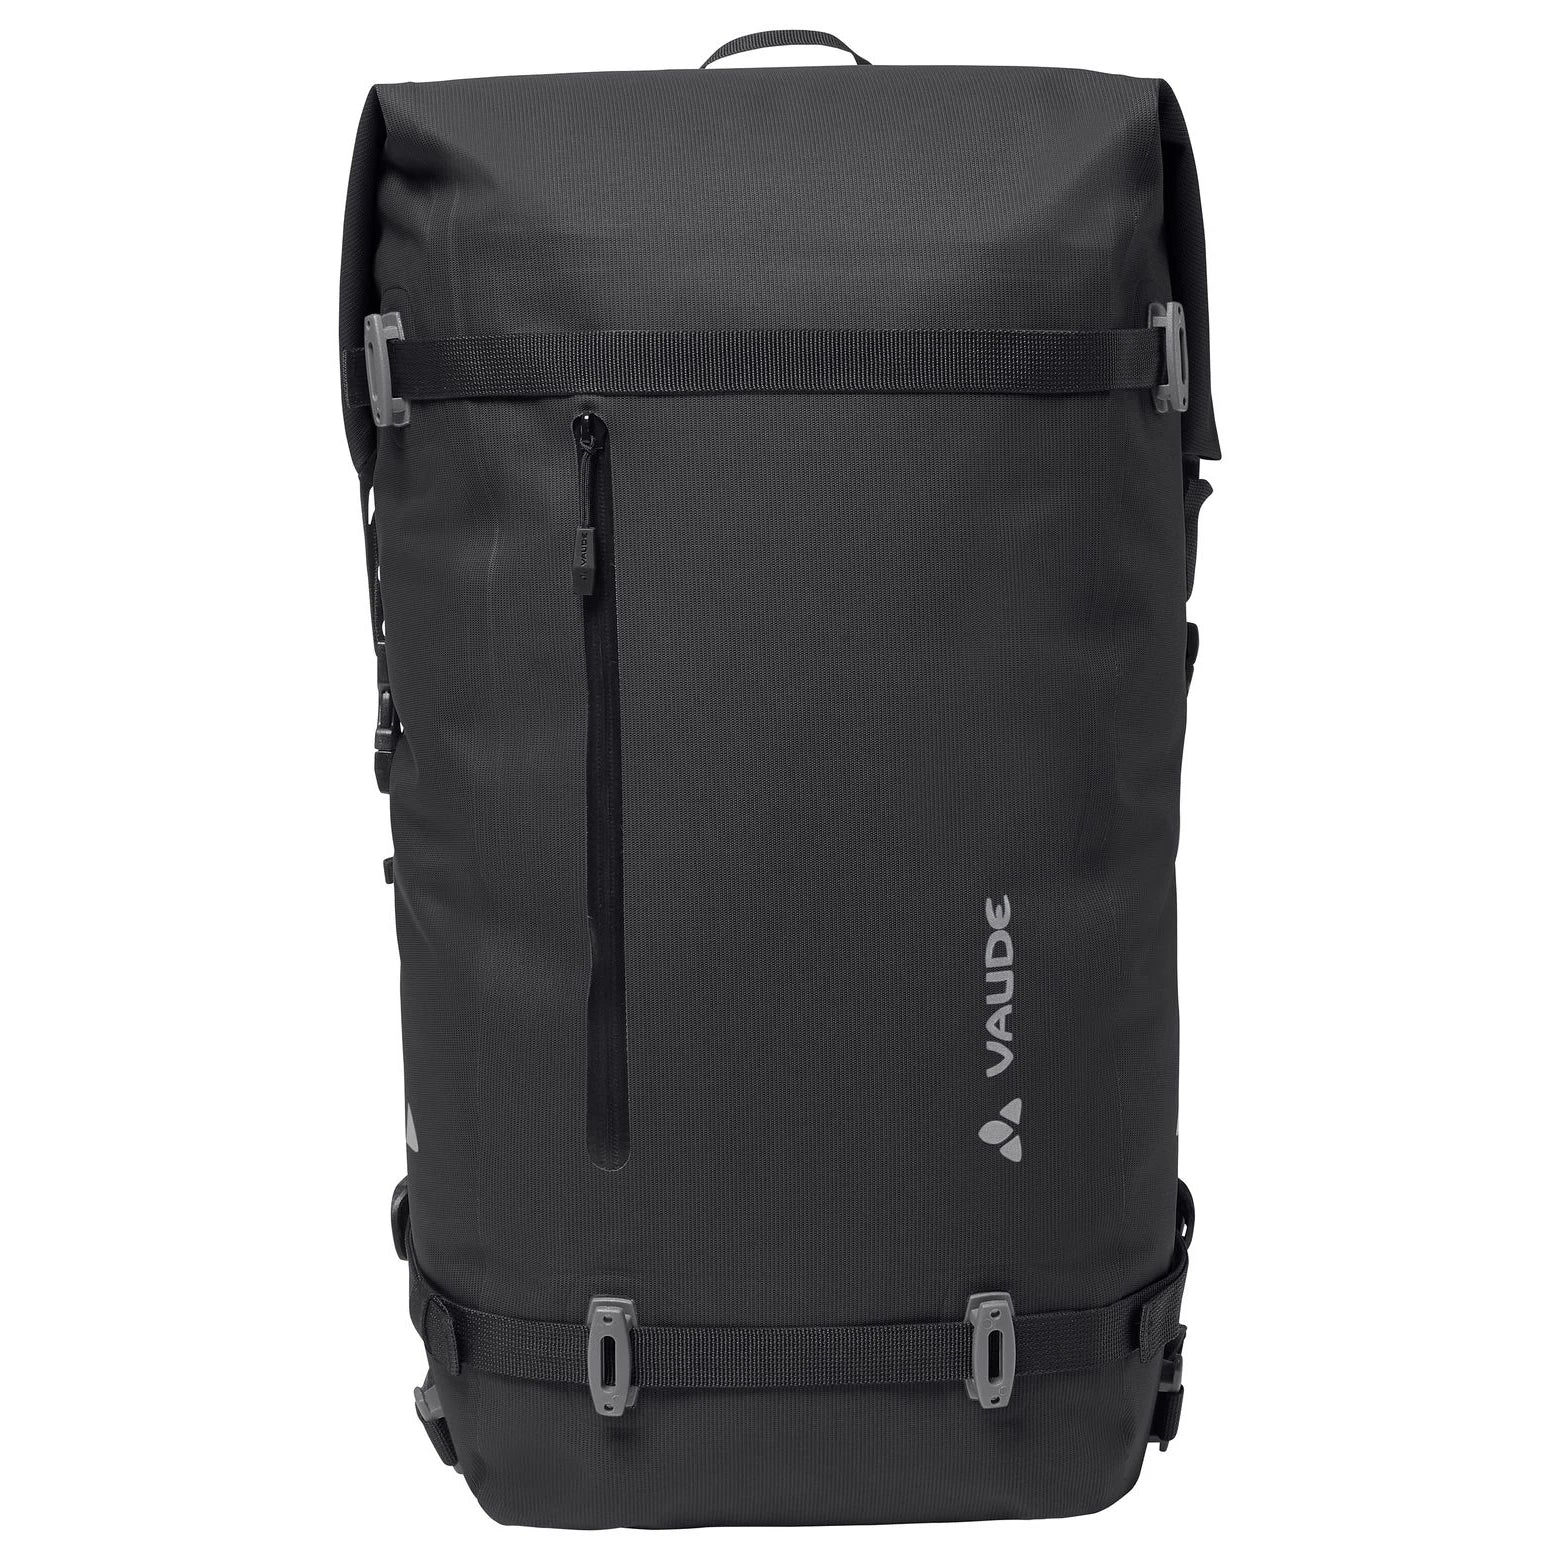 Vaude Made in Germany Proof 22 Backpack 48 cm - Black